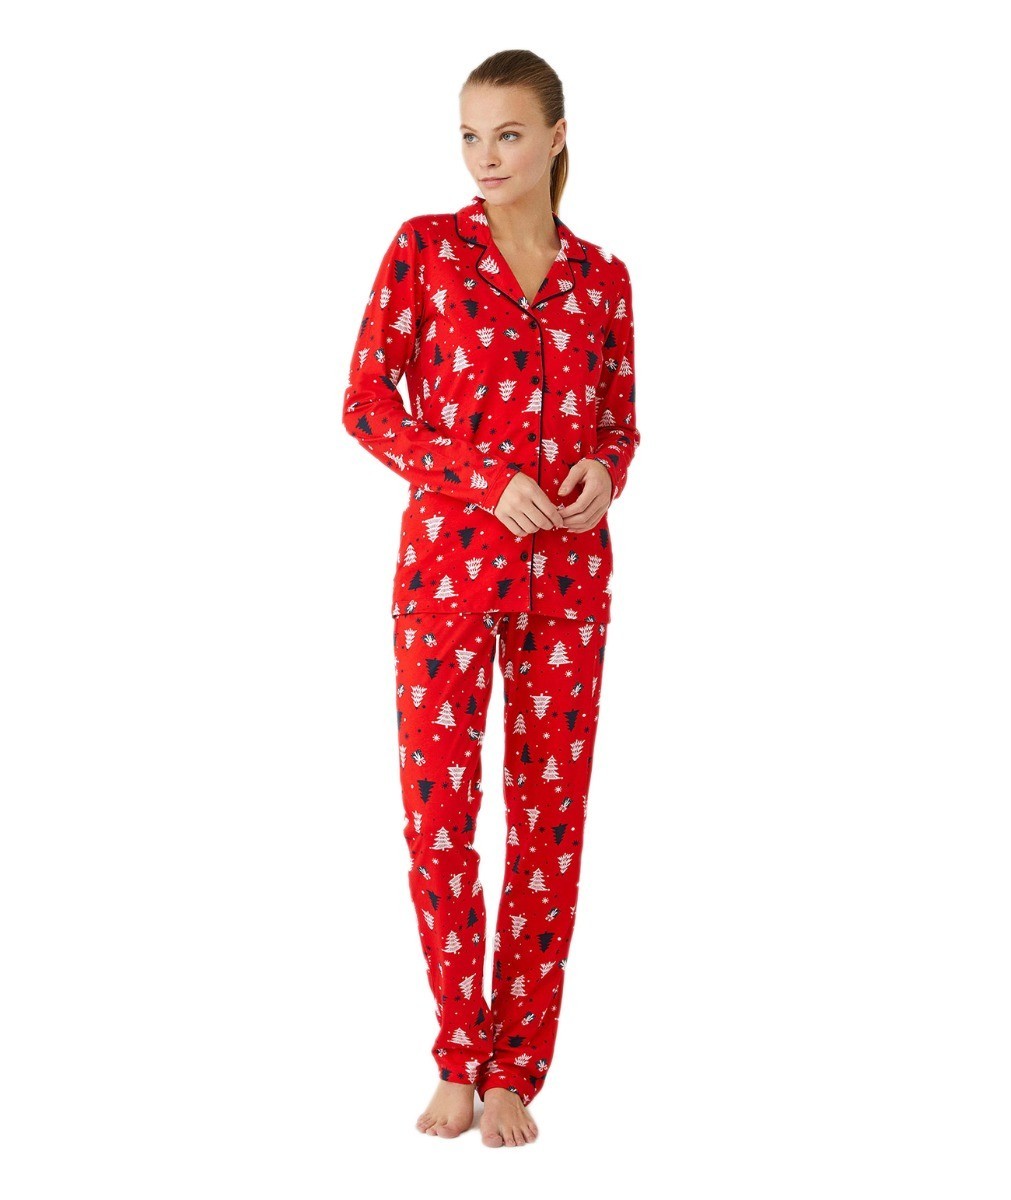 Damen Pyjama Jackenartig